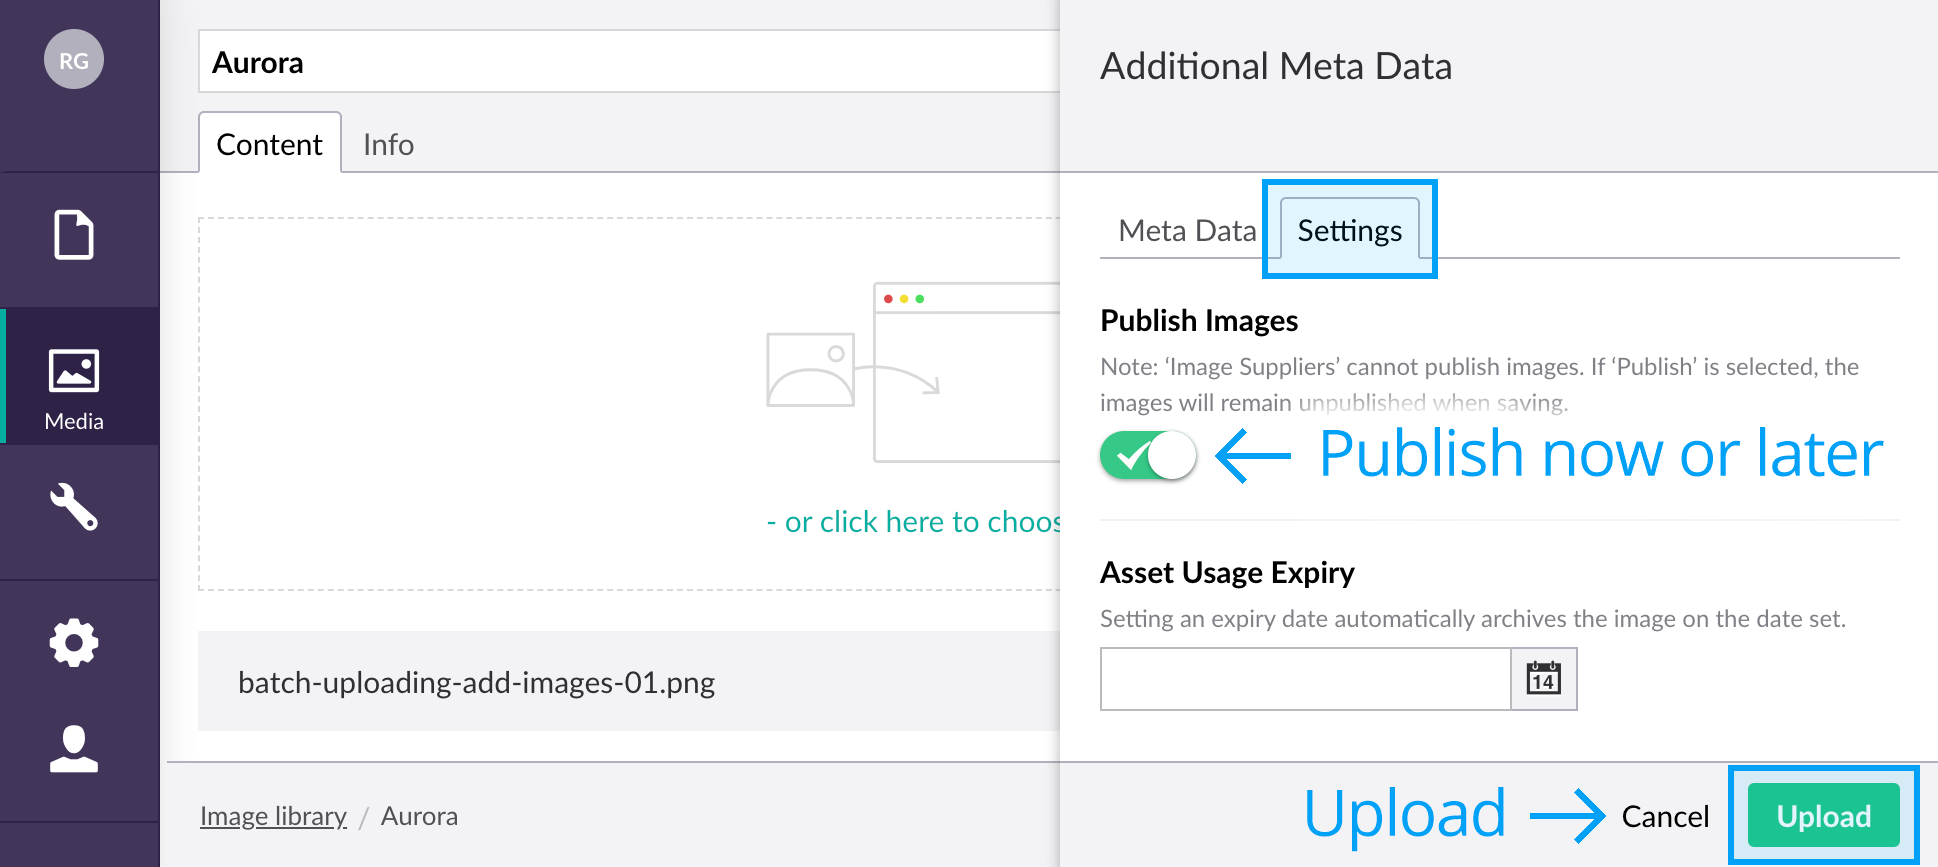 Uploading metadata and settings before upload